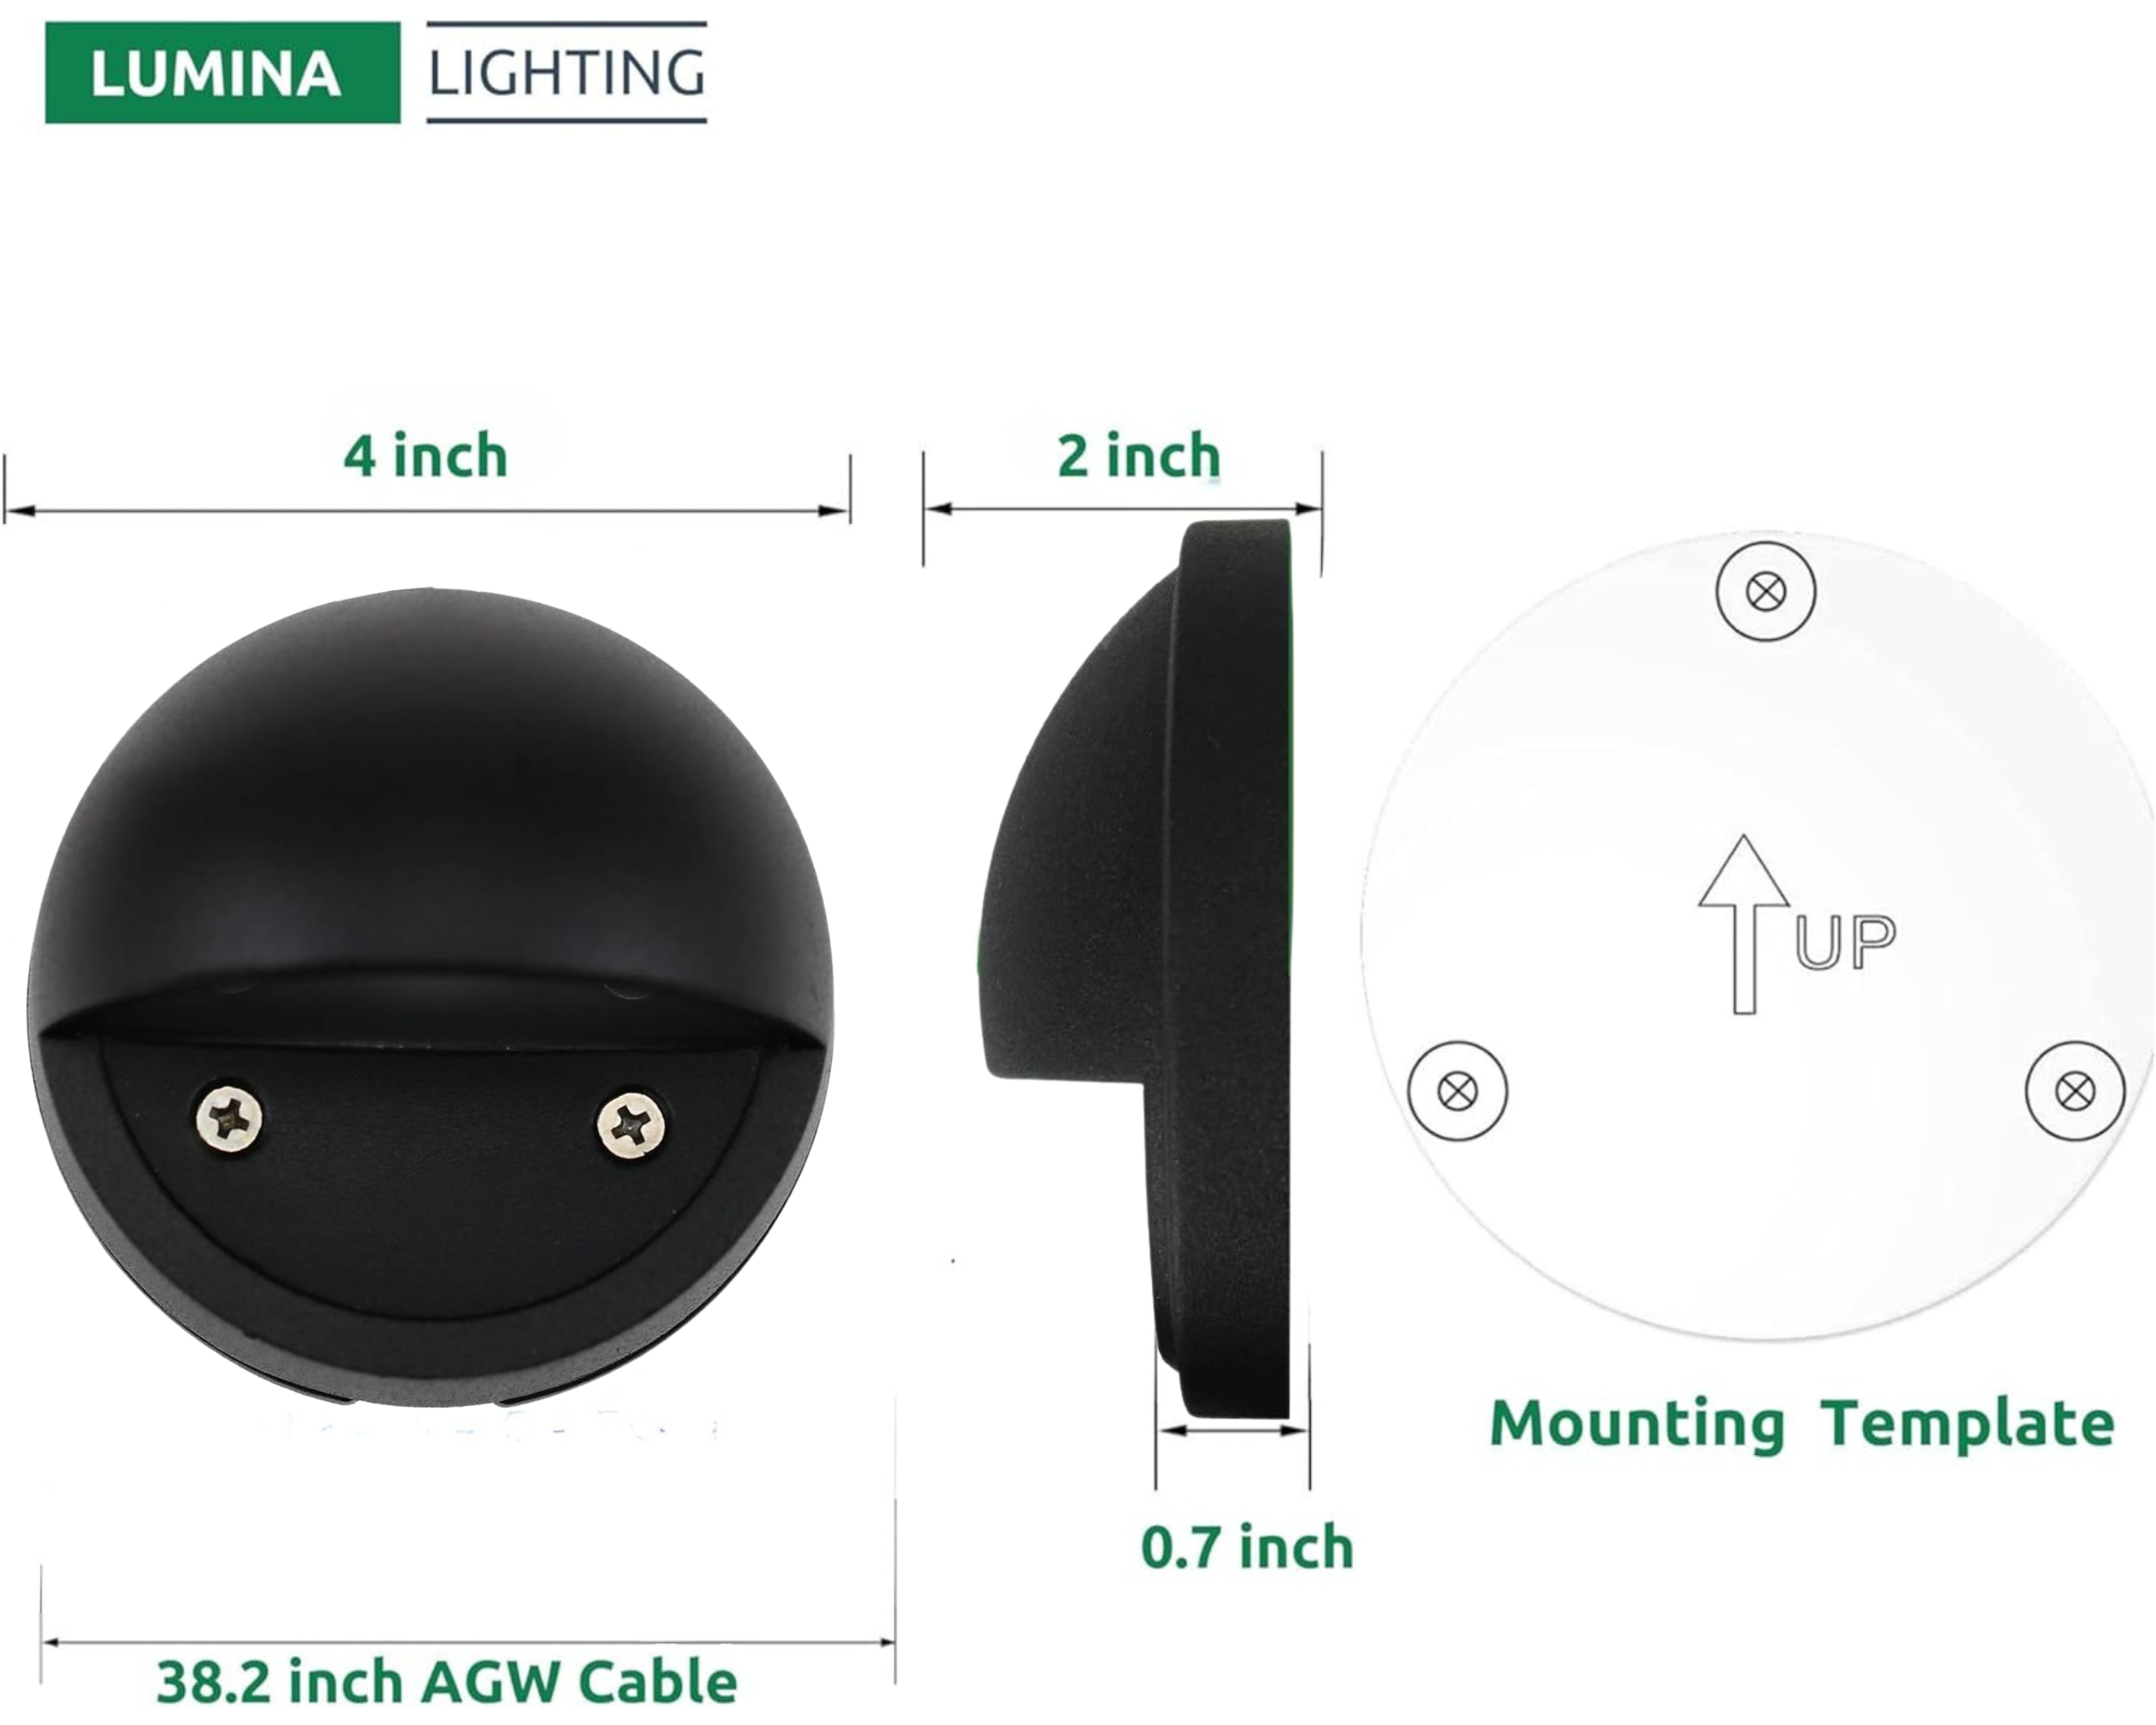 Lumina Lighting® 2W Low Voltage LED Deck Lights | 12V AC/DC | Replaceable LED Bulb Included | (Black, 12-Pack)